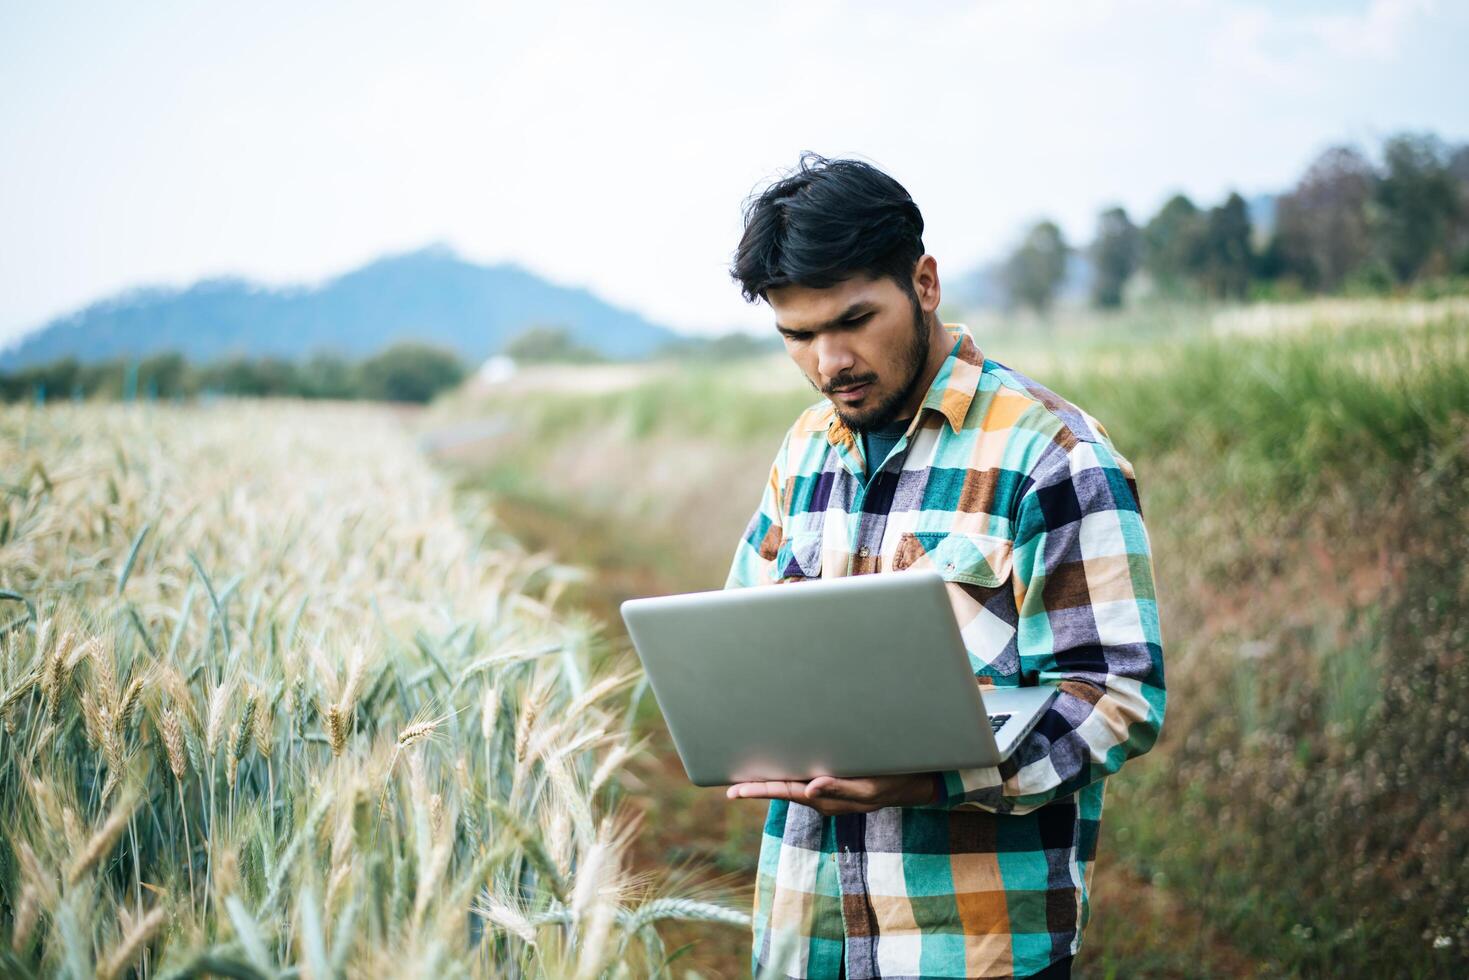 slimme boer die gerstboerderij controleert met laptopcomputer foto